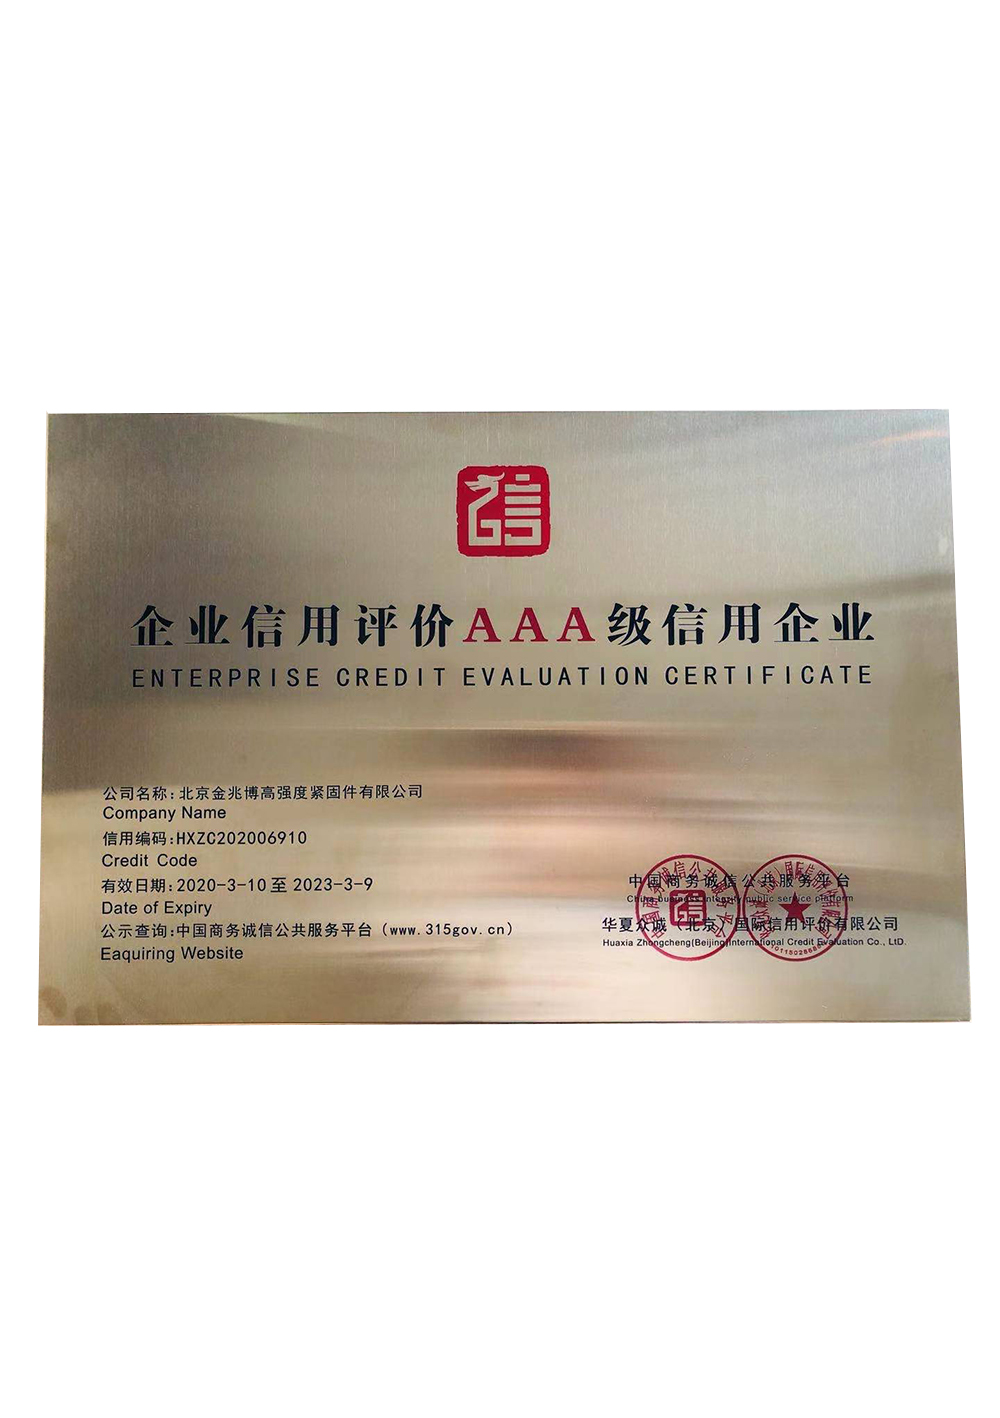 Enterprise credit evaluation AAA grade credit enterprise